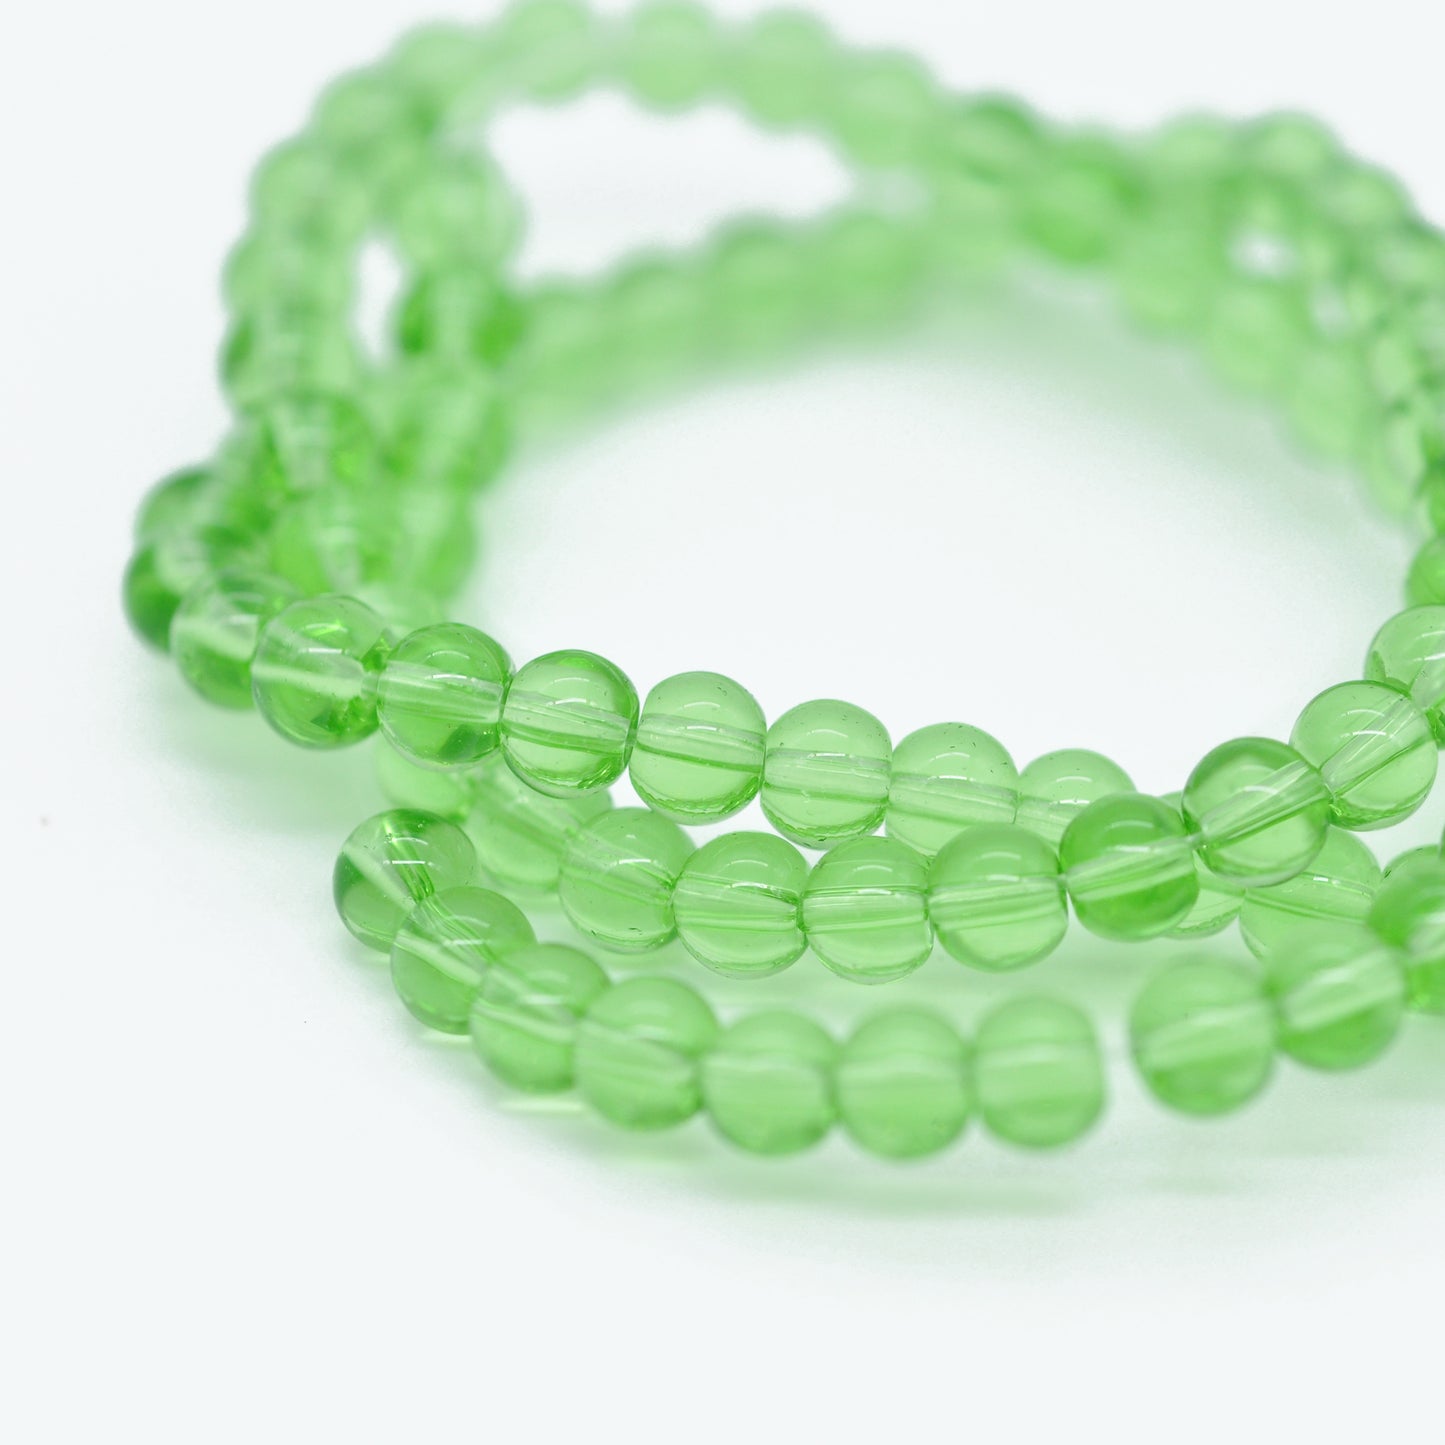 Strand of glass beads / green / Ø 4 mm